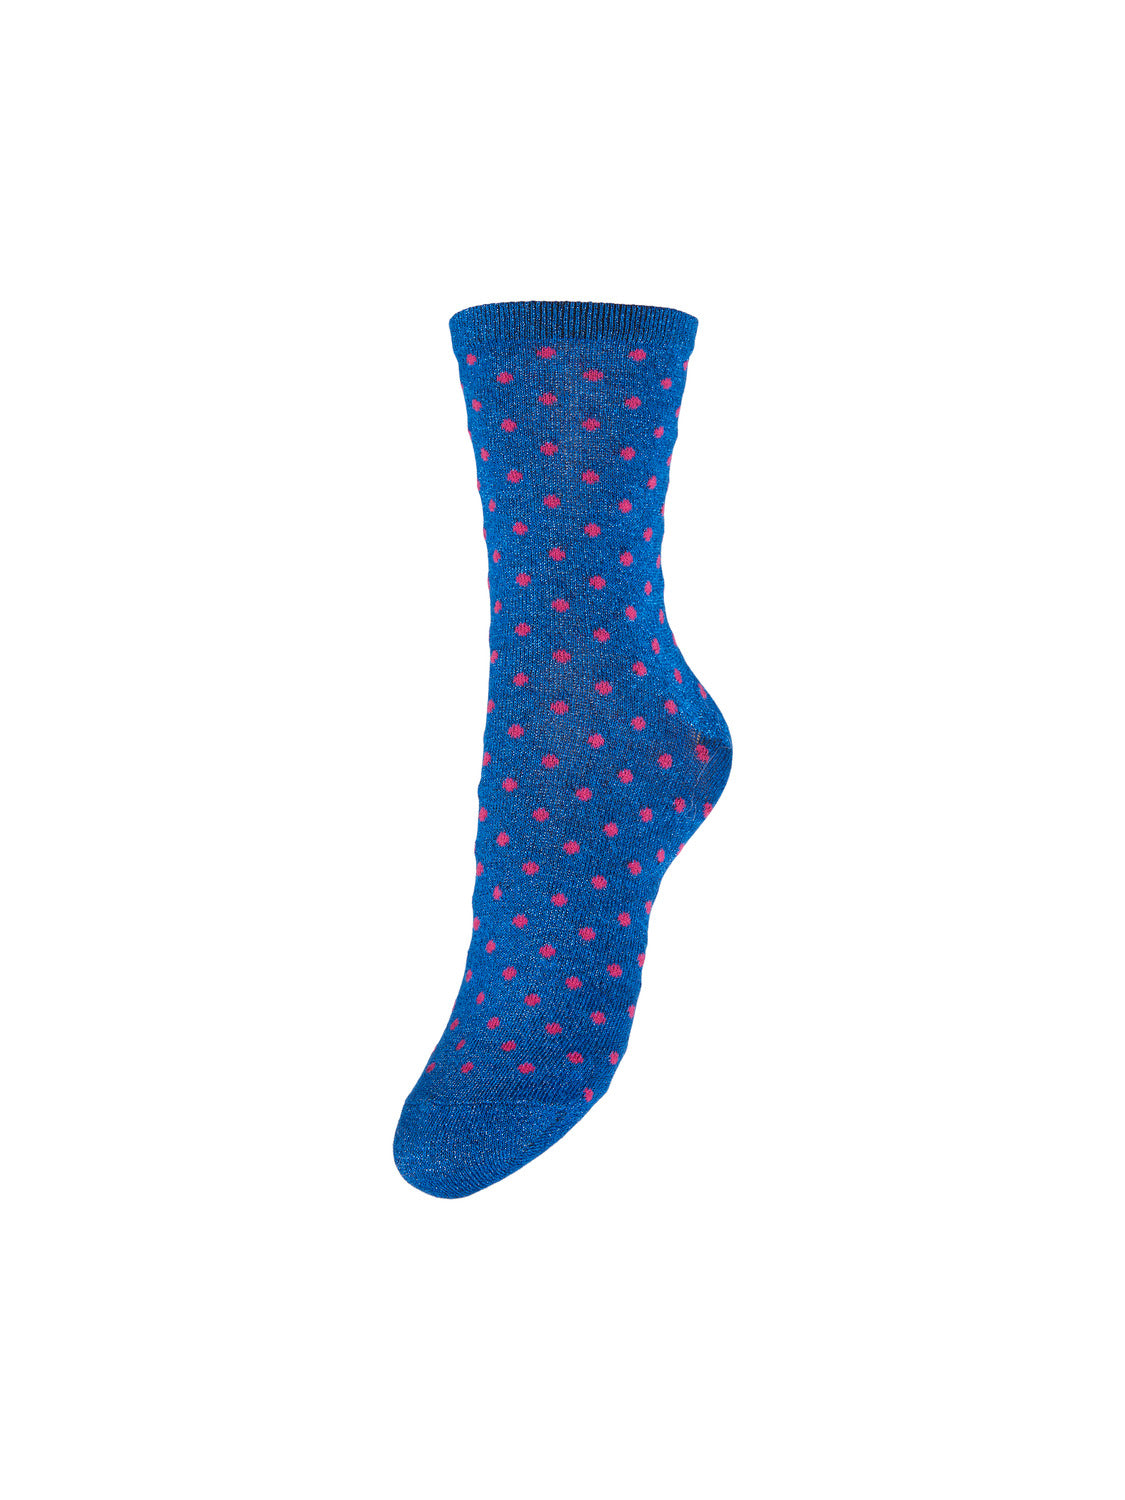 PCSEBBY Socks - French Blue